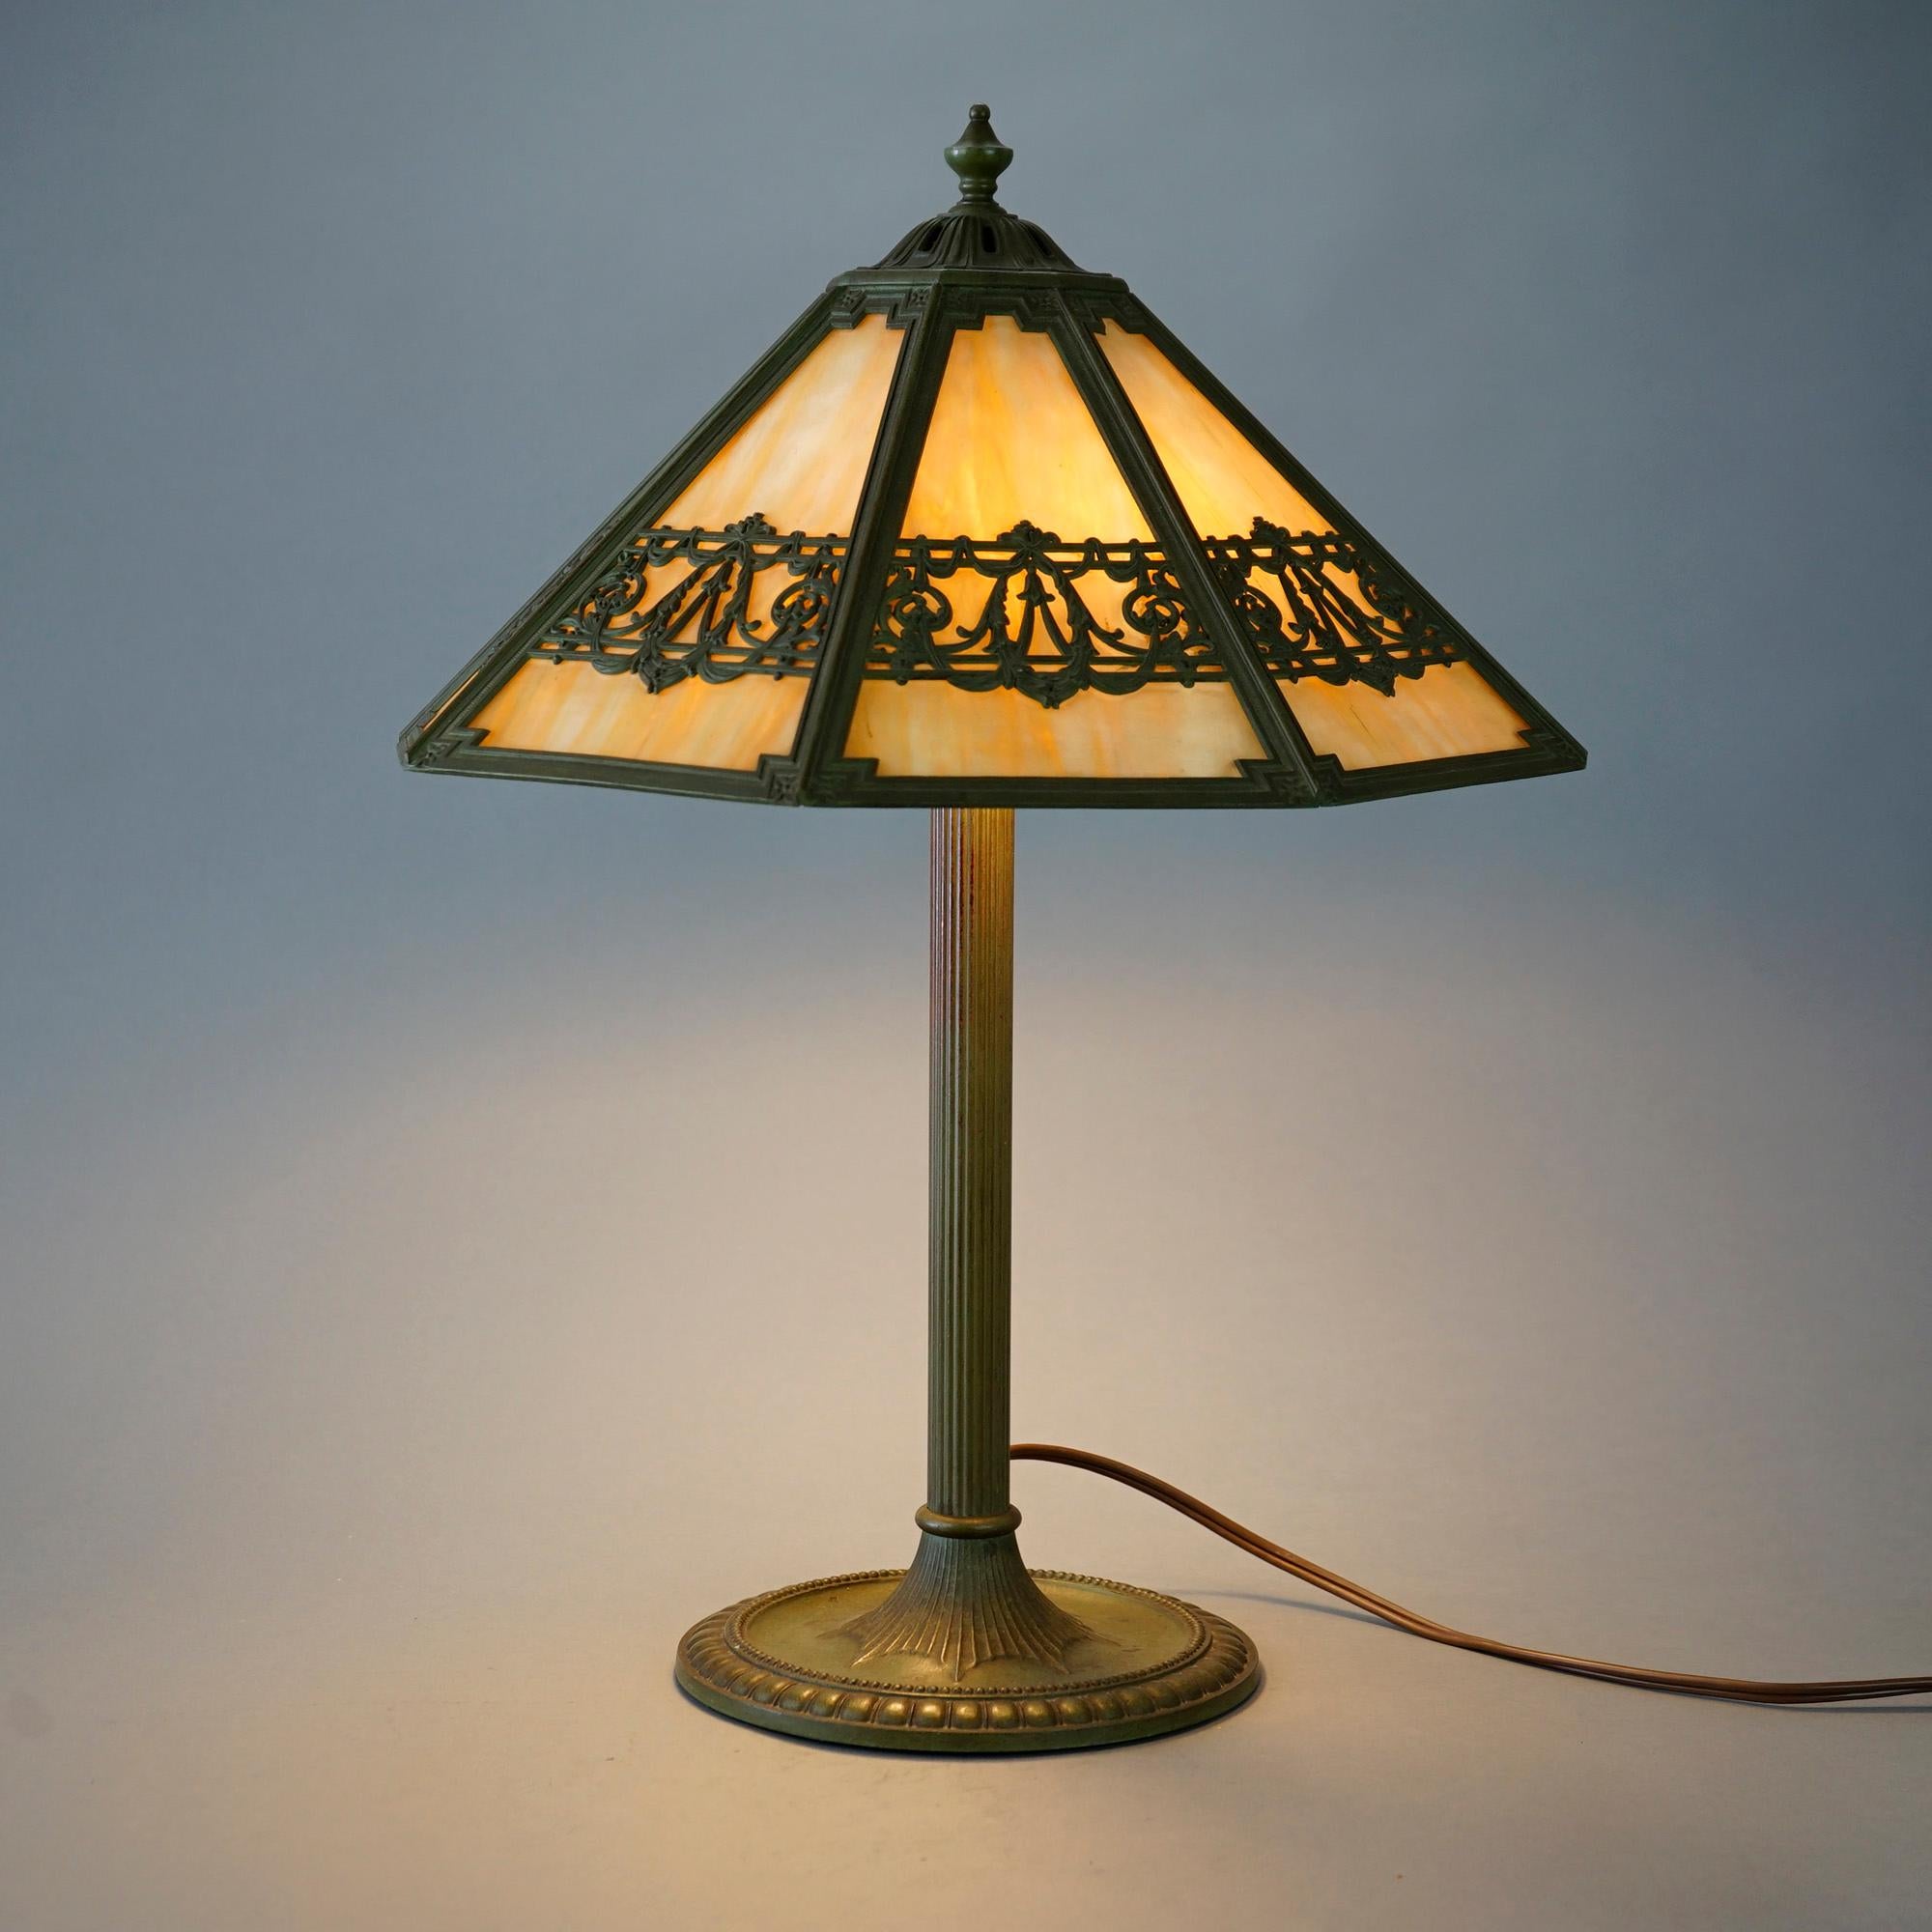 bradley & hubbard lamp identification